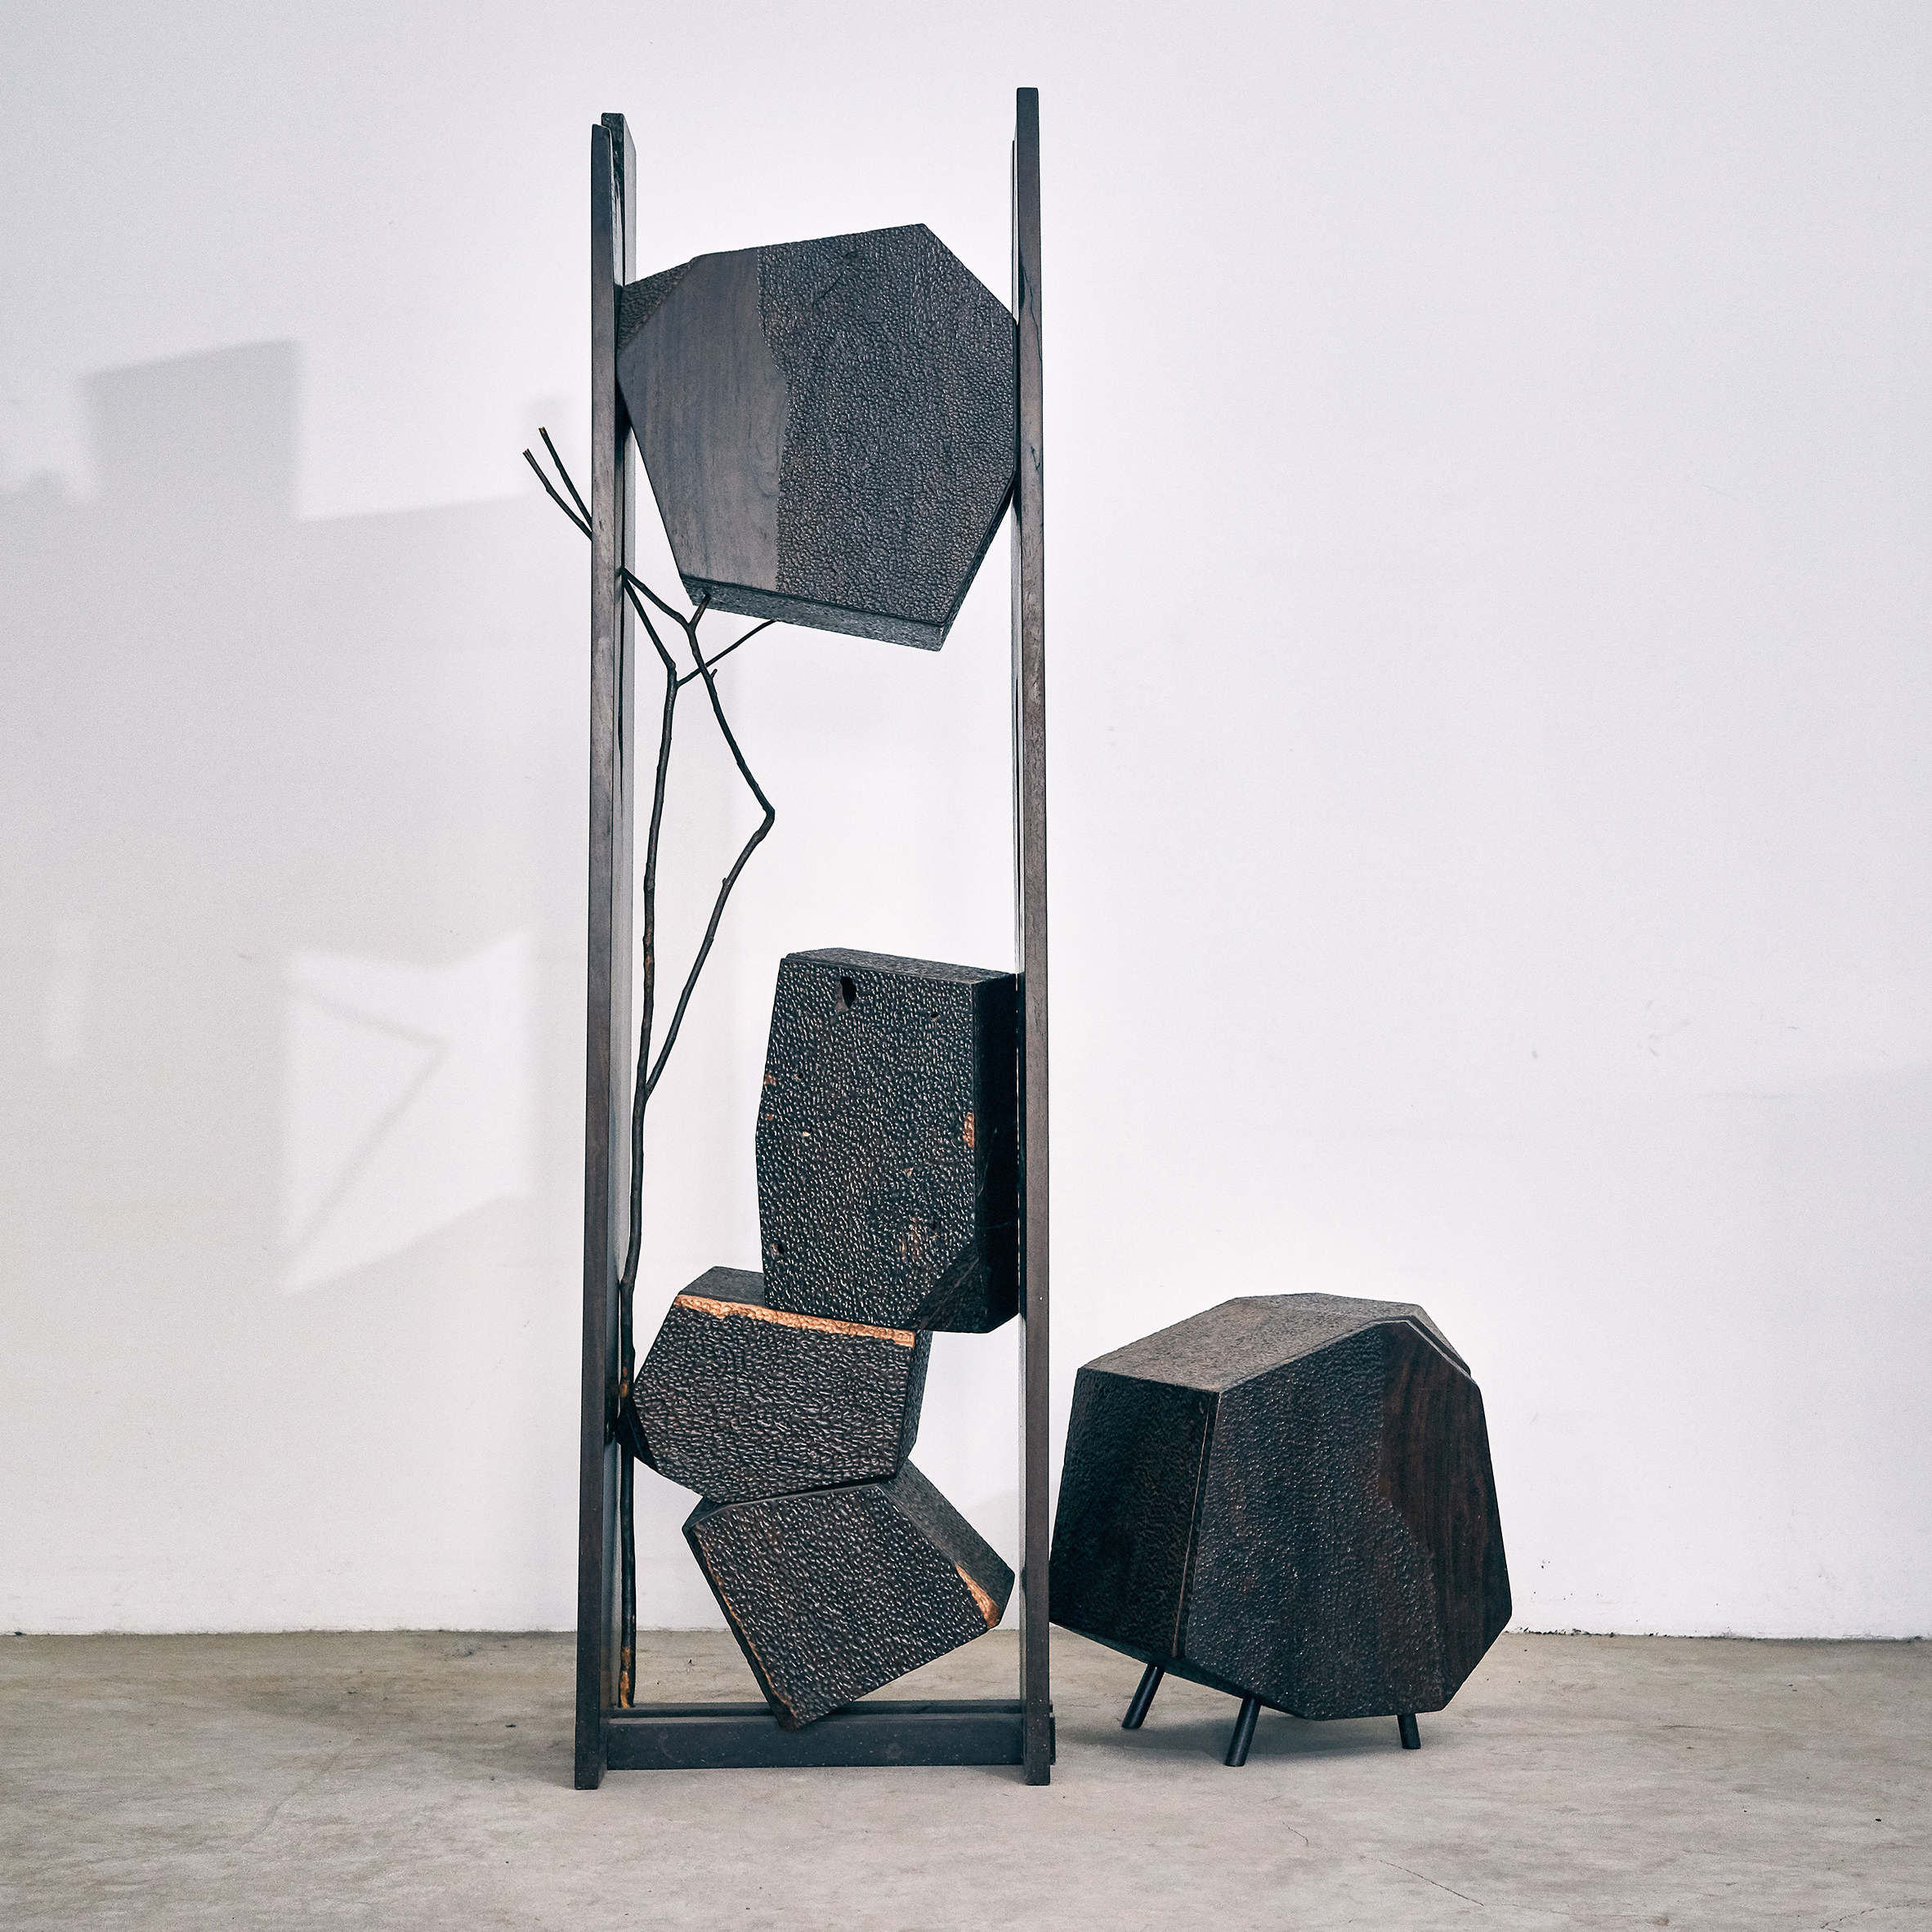 Furniture by Yemu1978 at Design China Beijing 2019